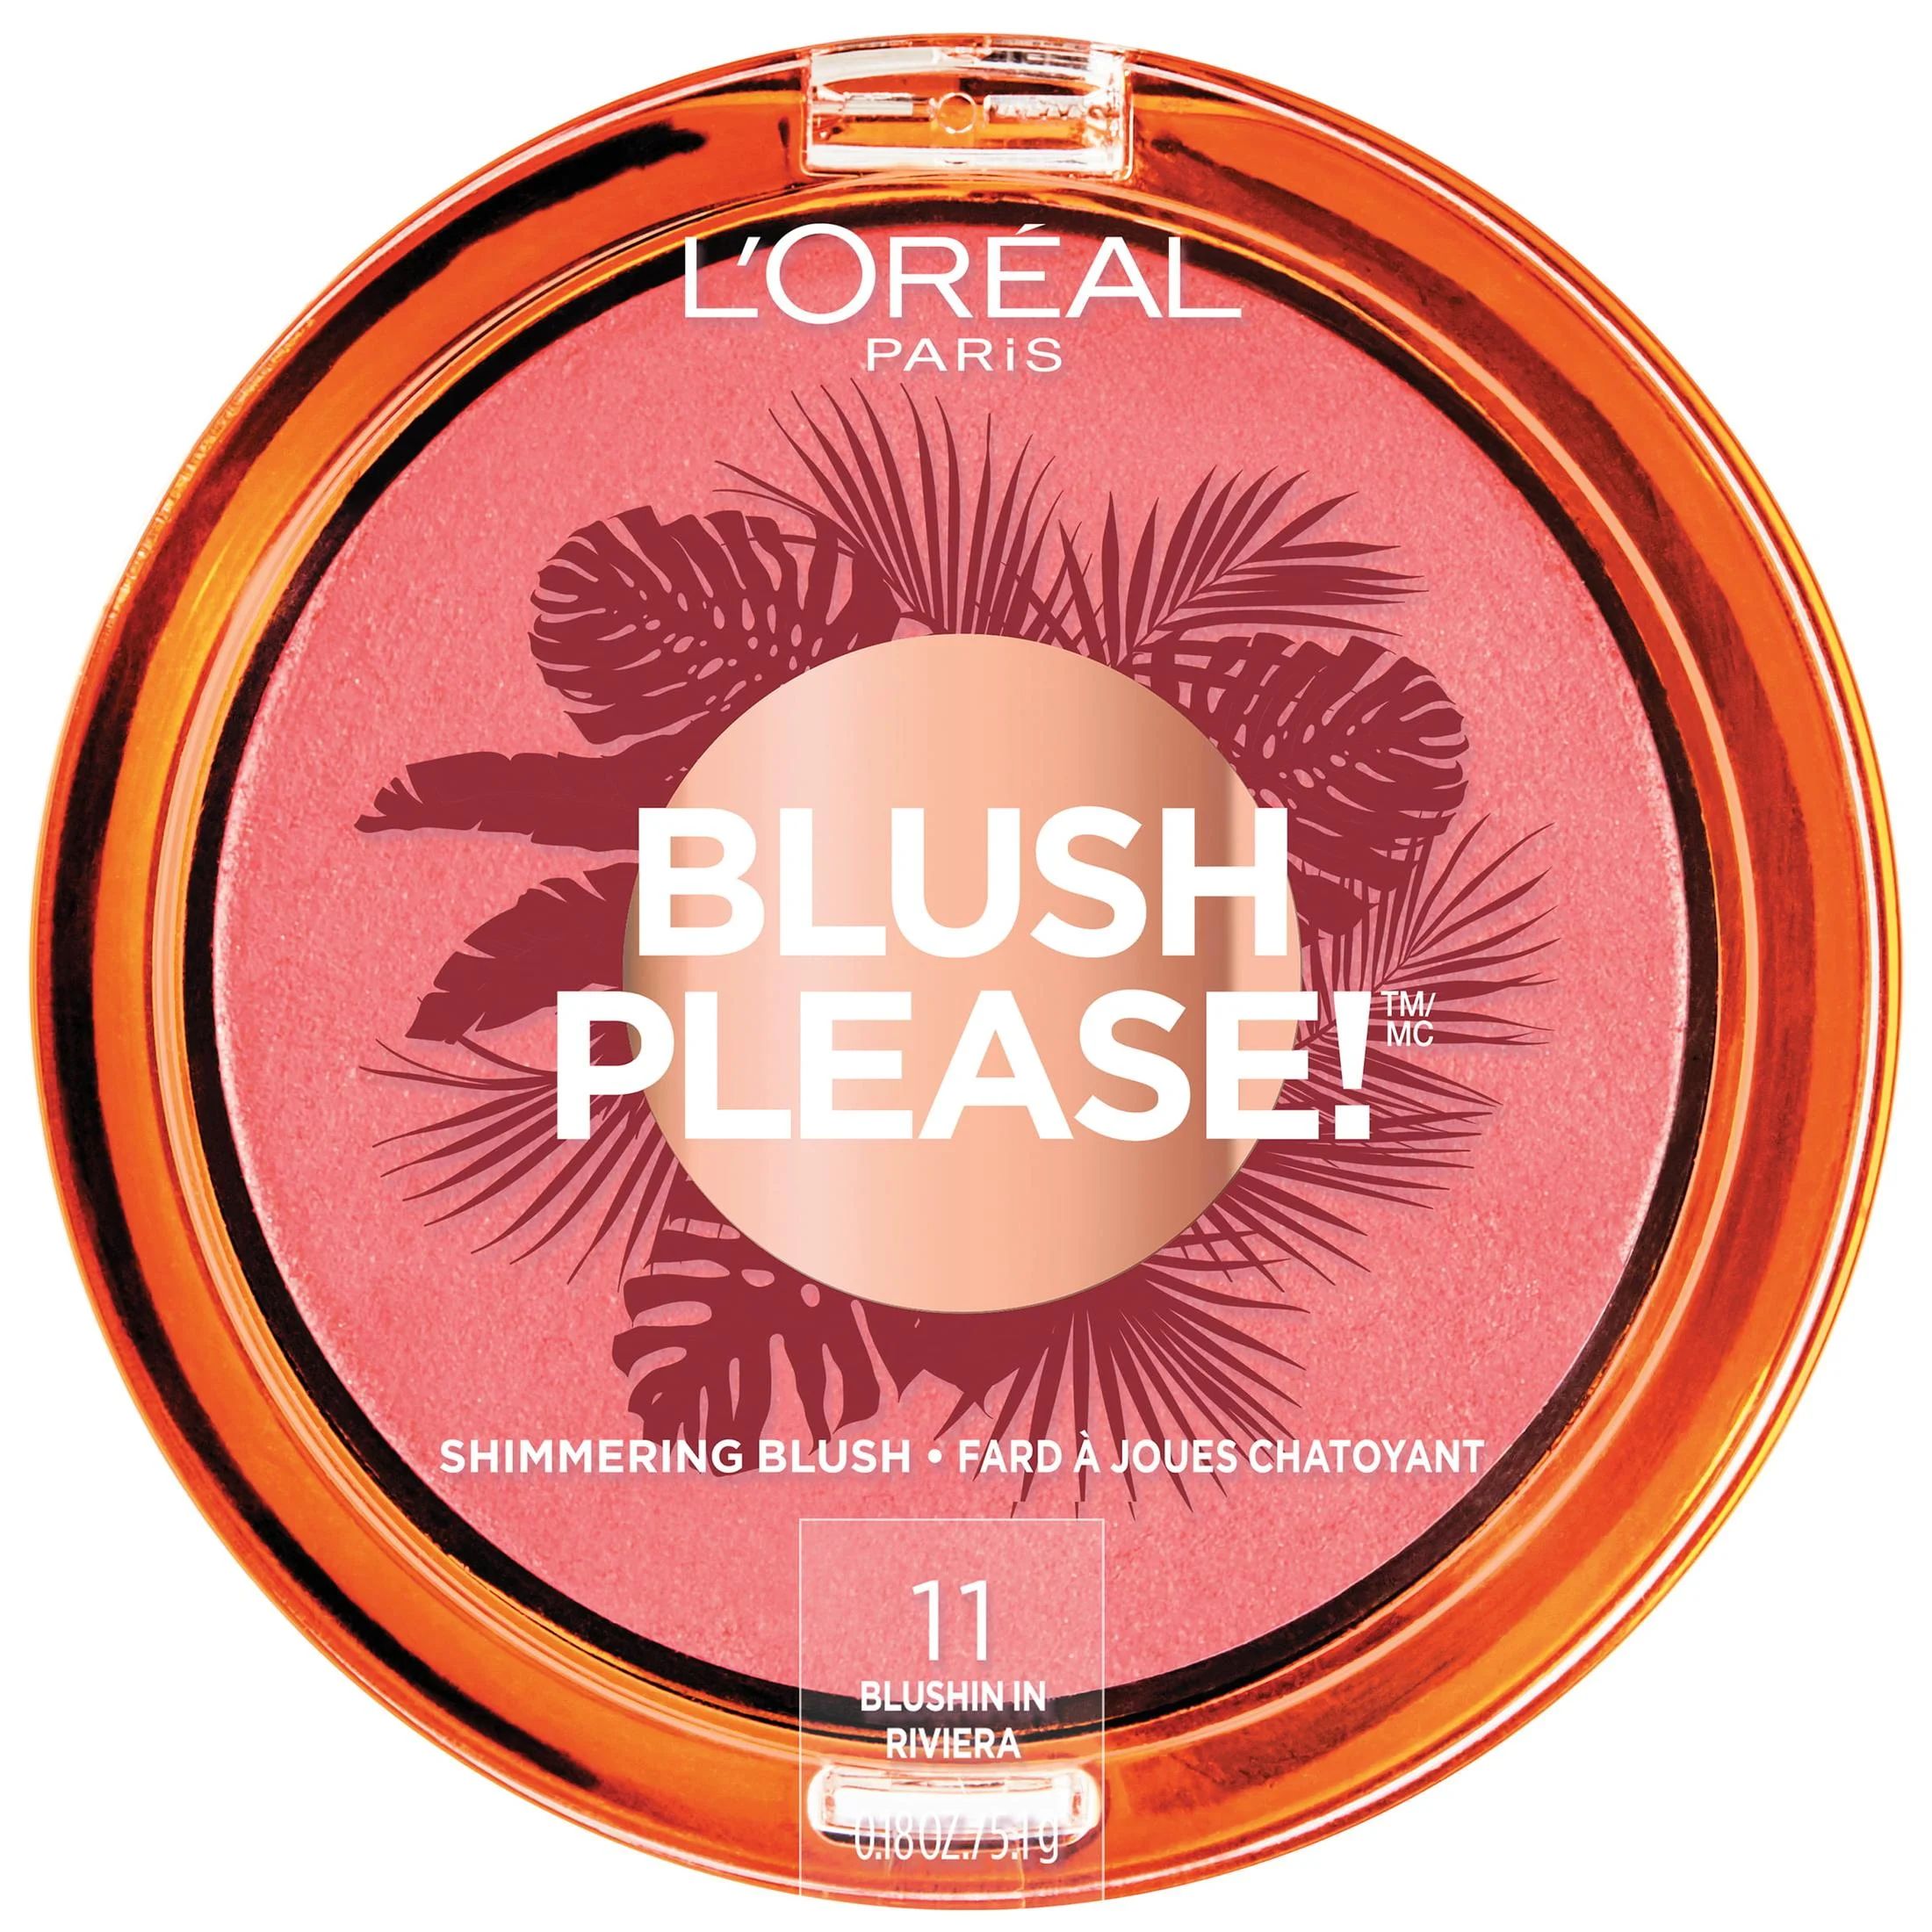 L'Oreal Paris Summer Belle Makeup Collection, Blush Please, Blushing in Riviera, 0.18 oz | Walmart (US)